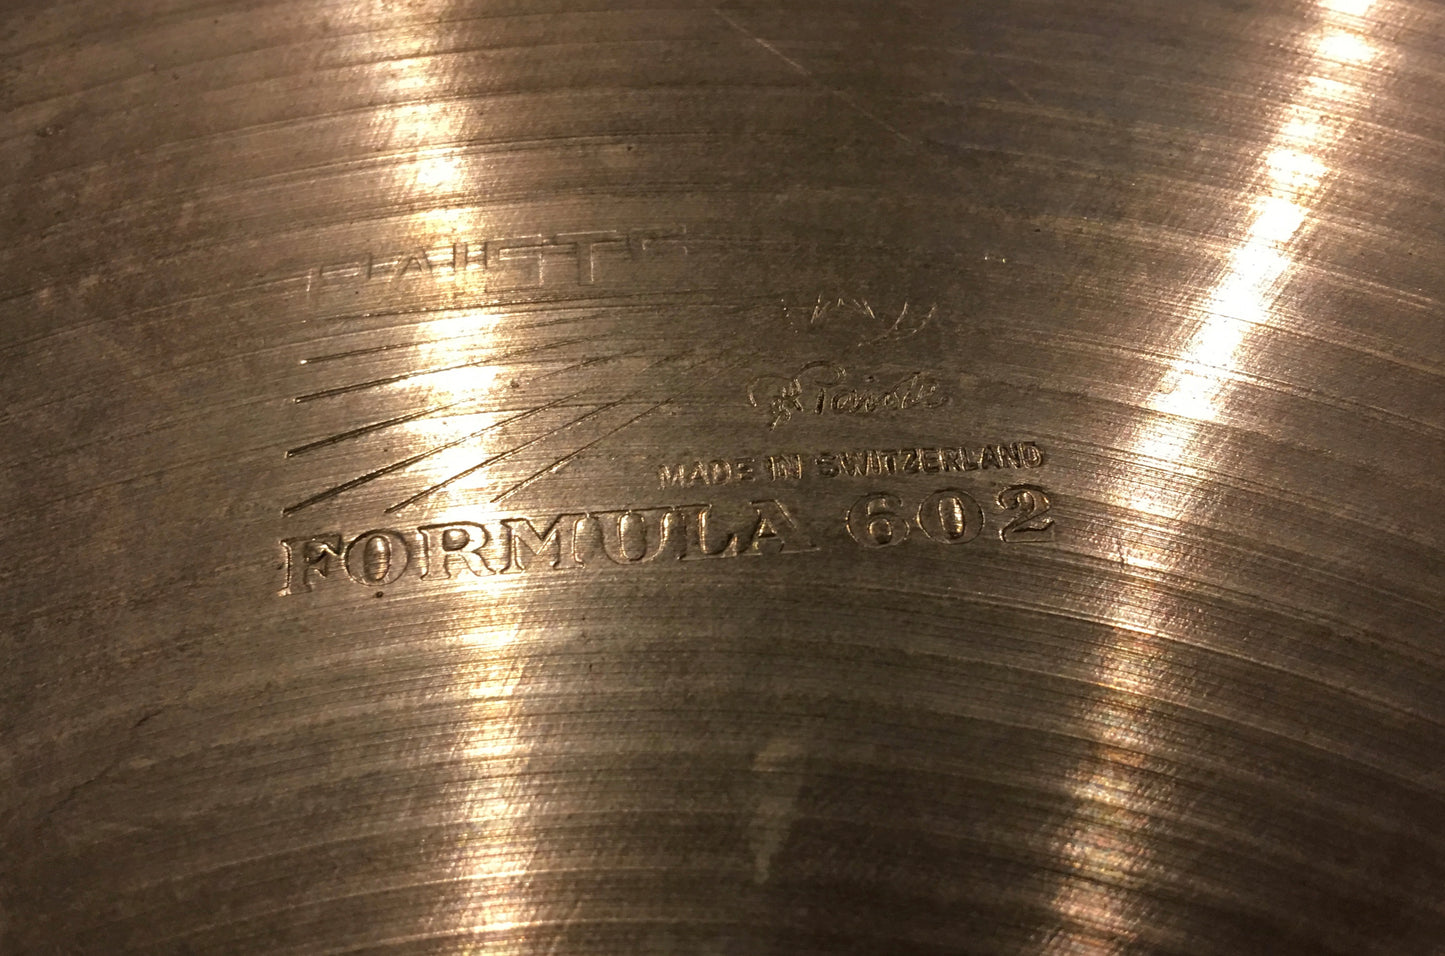 13" Paiste Formula 602 Pre Serial Number 1960s Hi-Hat Cymbals 604g/756g #485